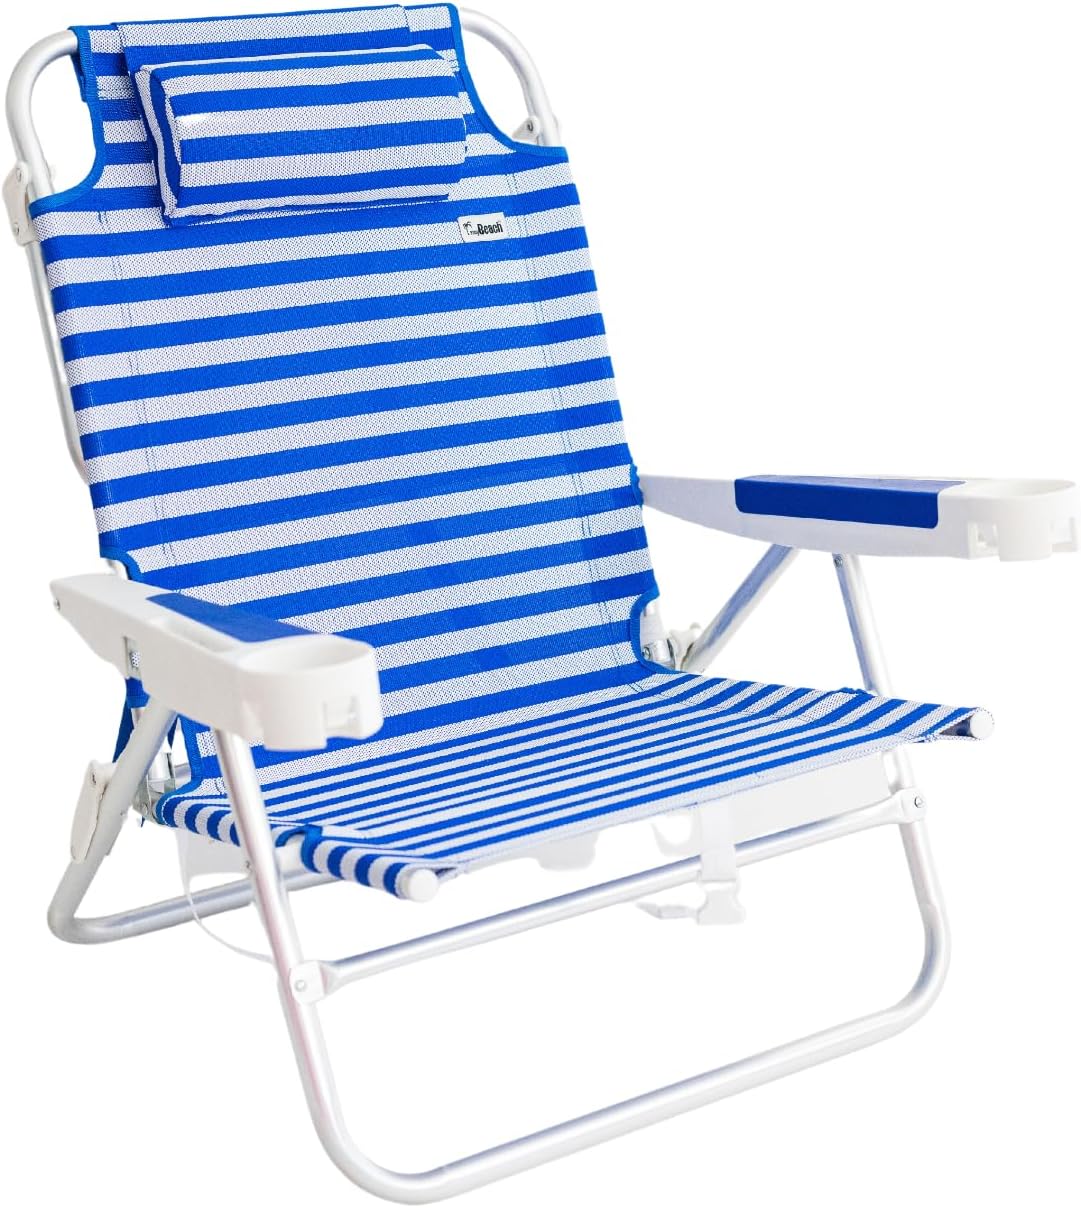 BUOY BEACH Lay Flat Beach Chair, Lightweight and Sturdy Design - Blue Stripe